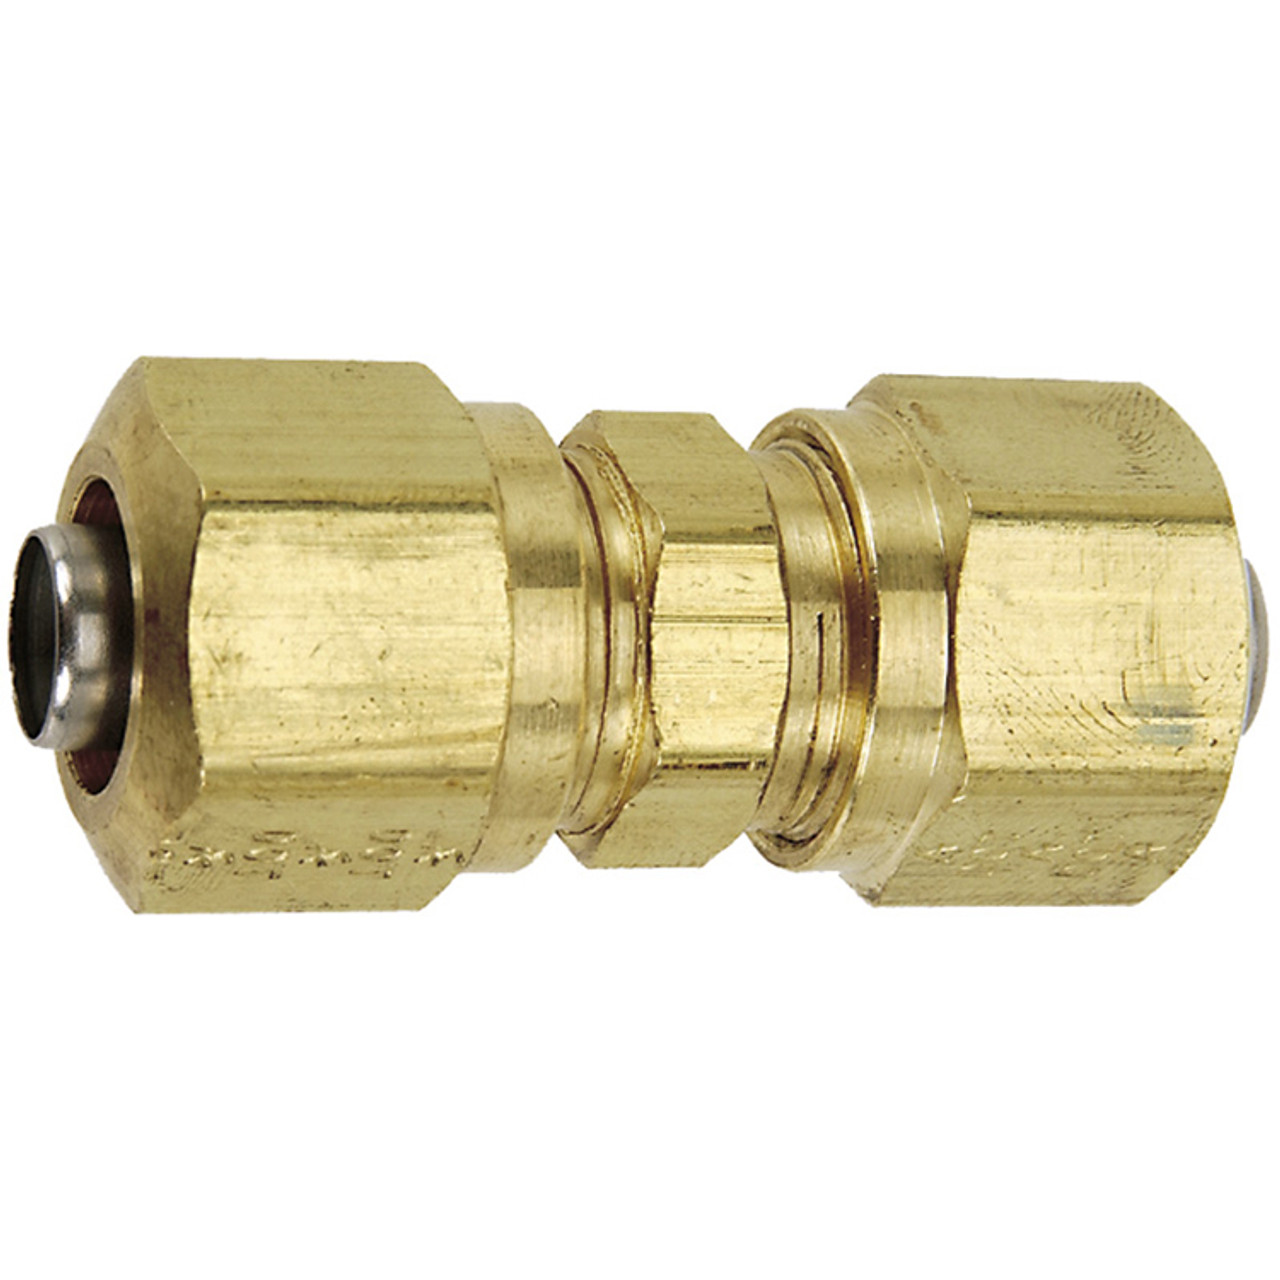 1/2" Brass DOT Compression Union   G7070-08-08